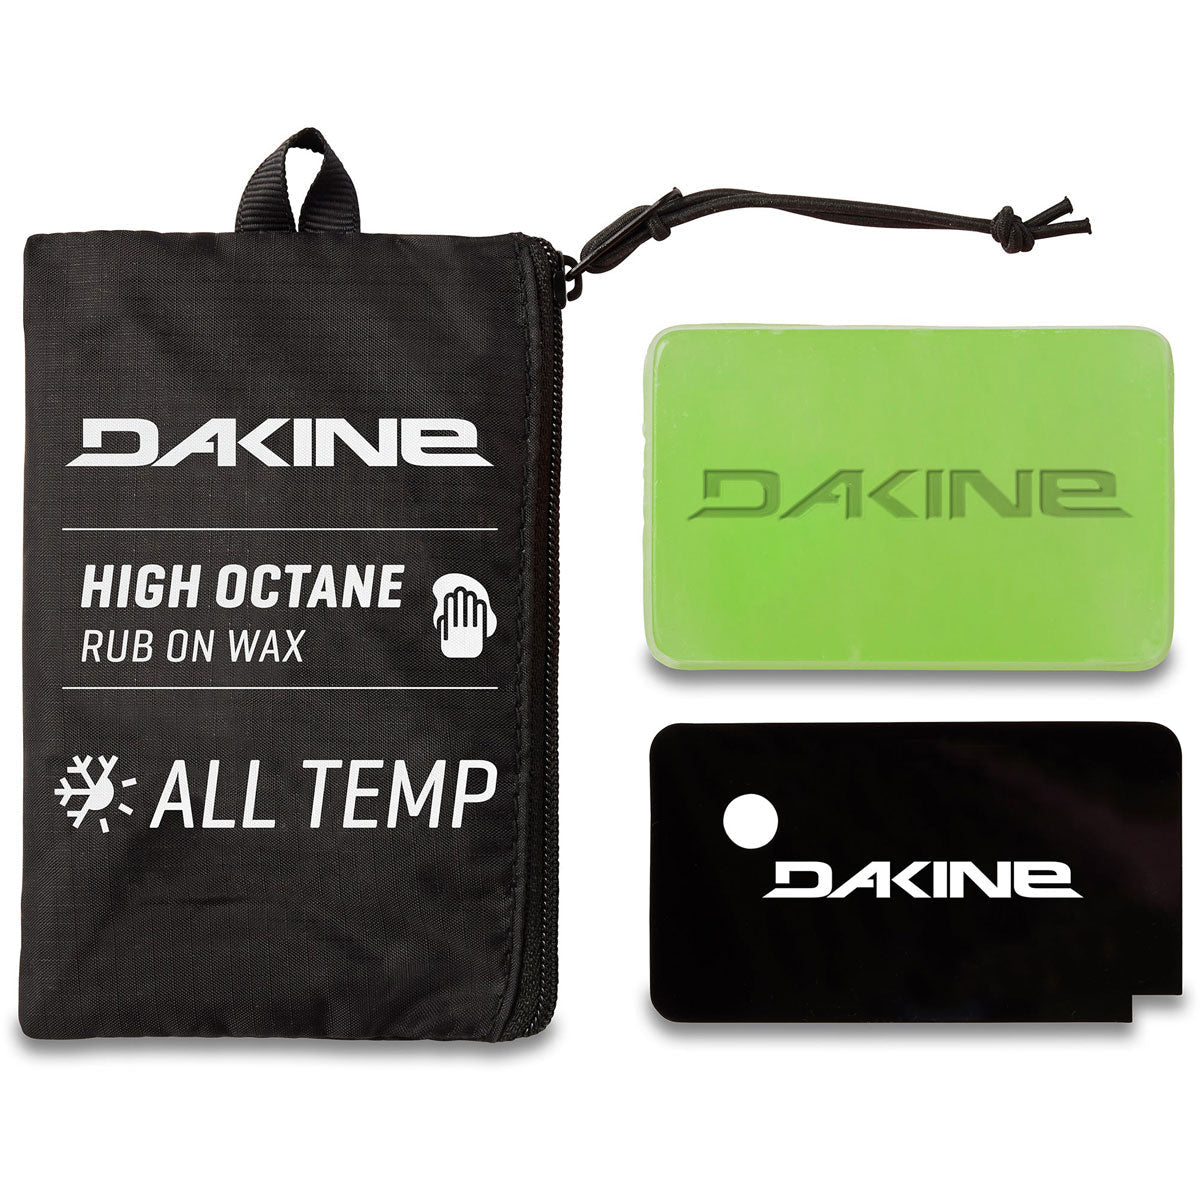 Dakine High Octane Rub On Snowboard Wax - 2.0 Oz image 2